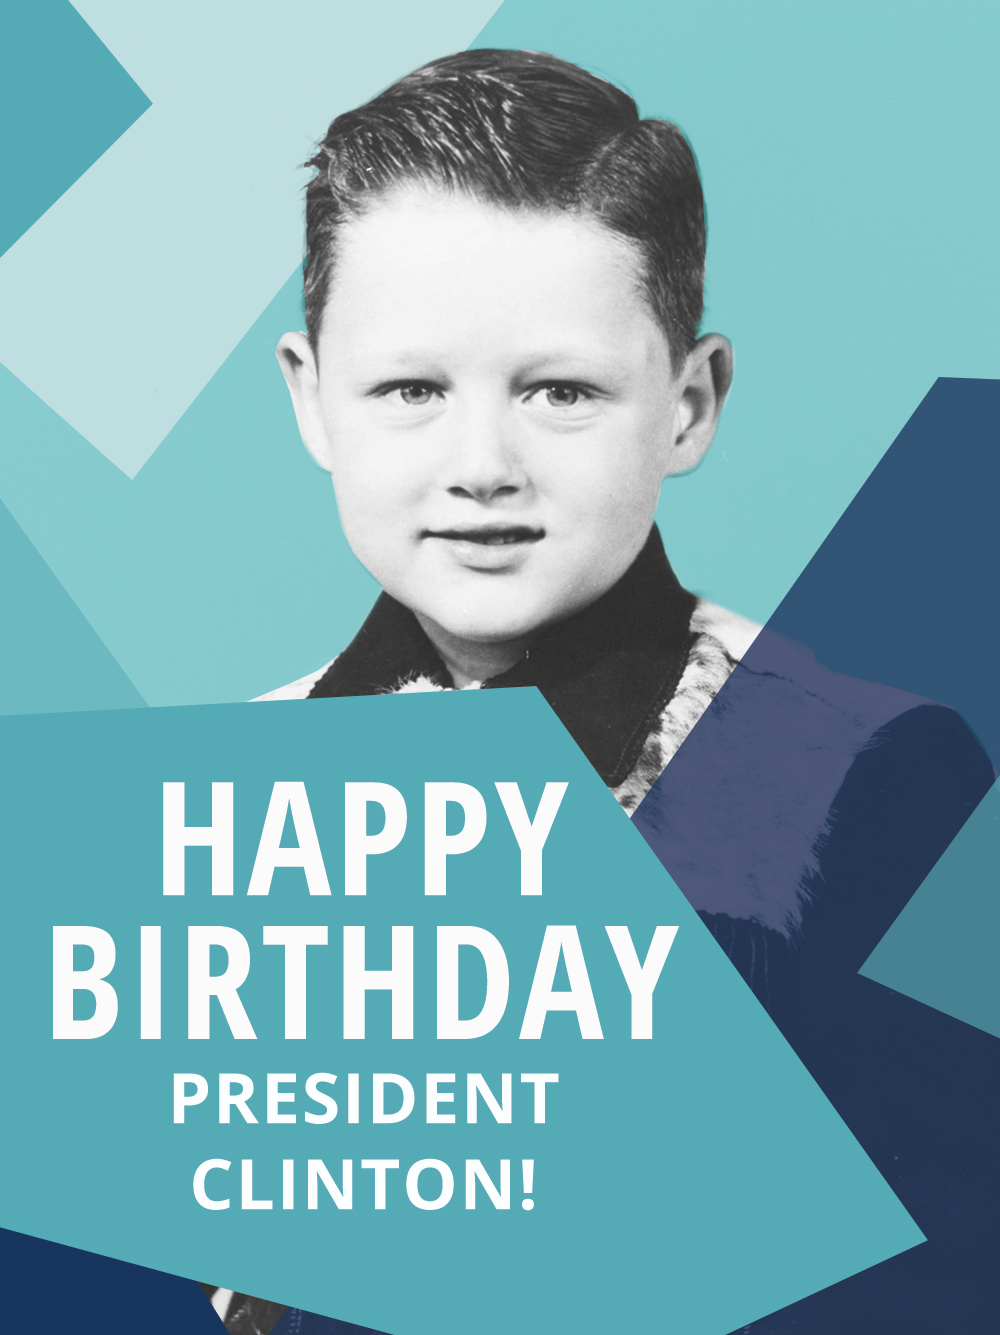 Happy Birthday, President Clinton!